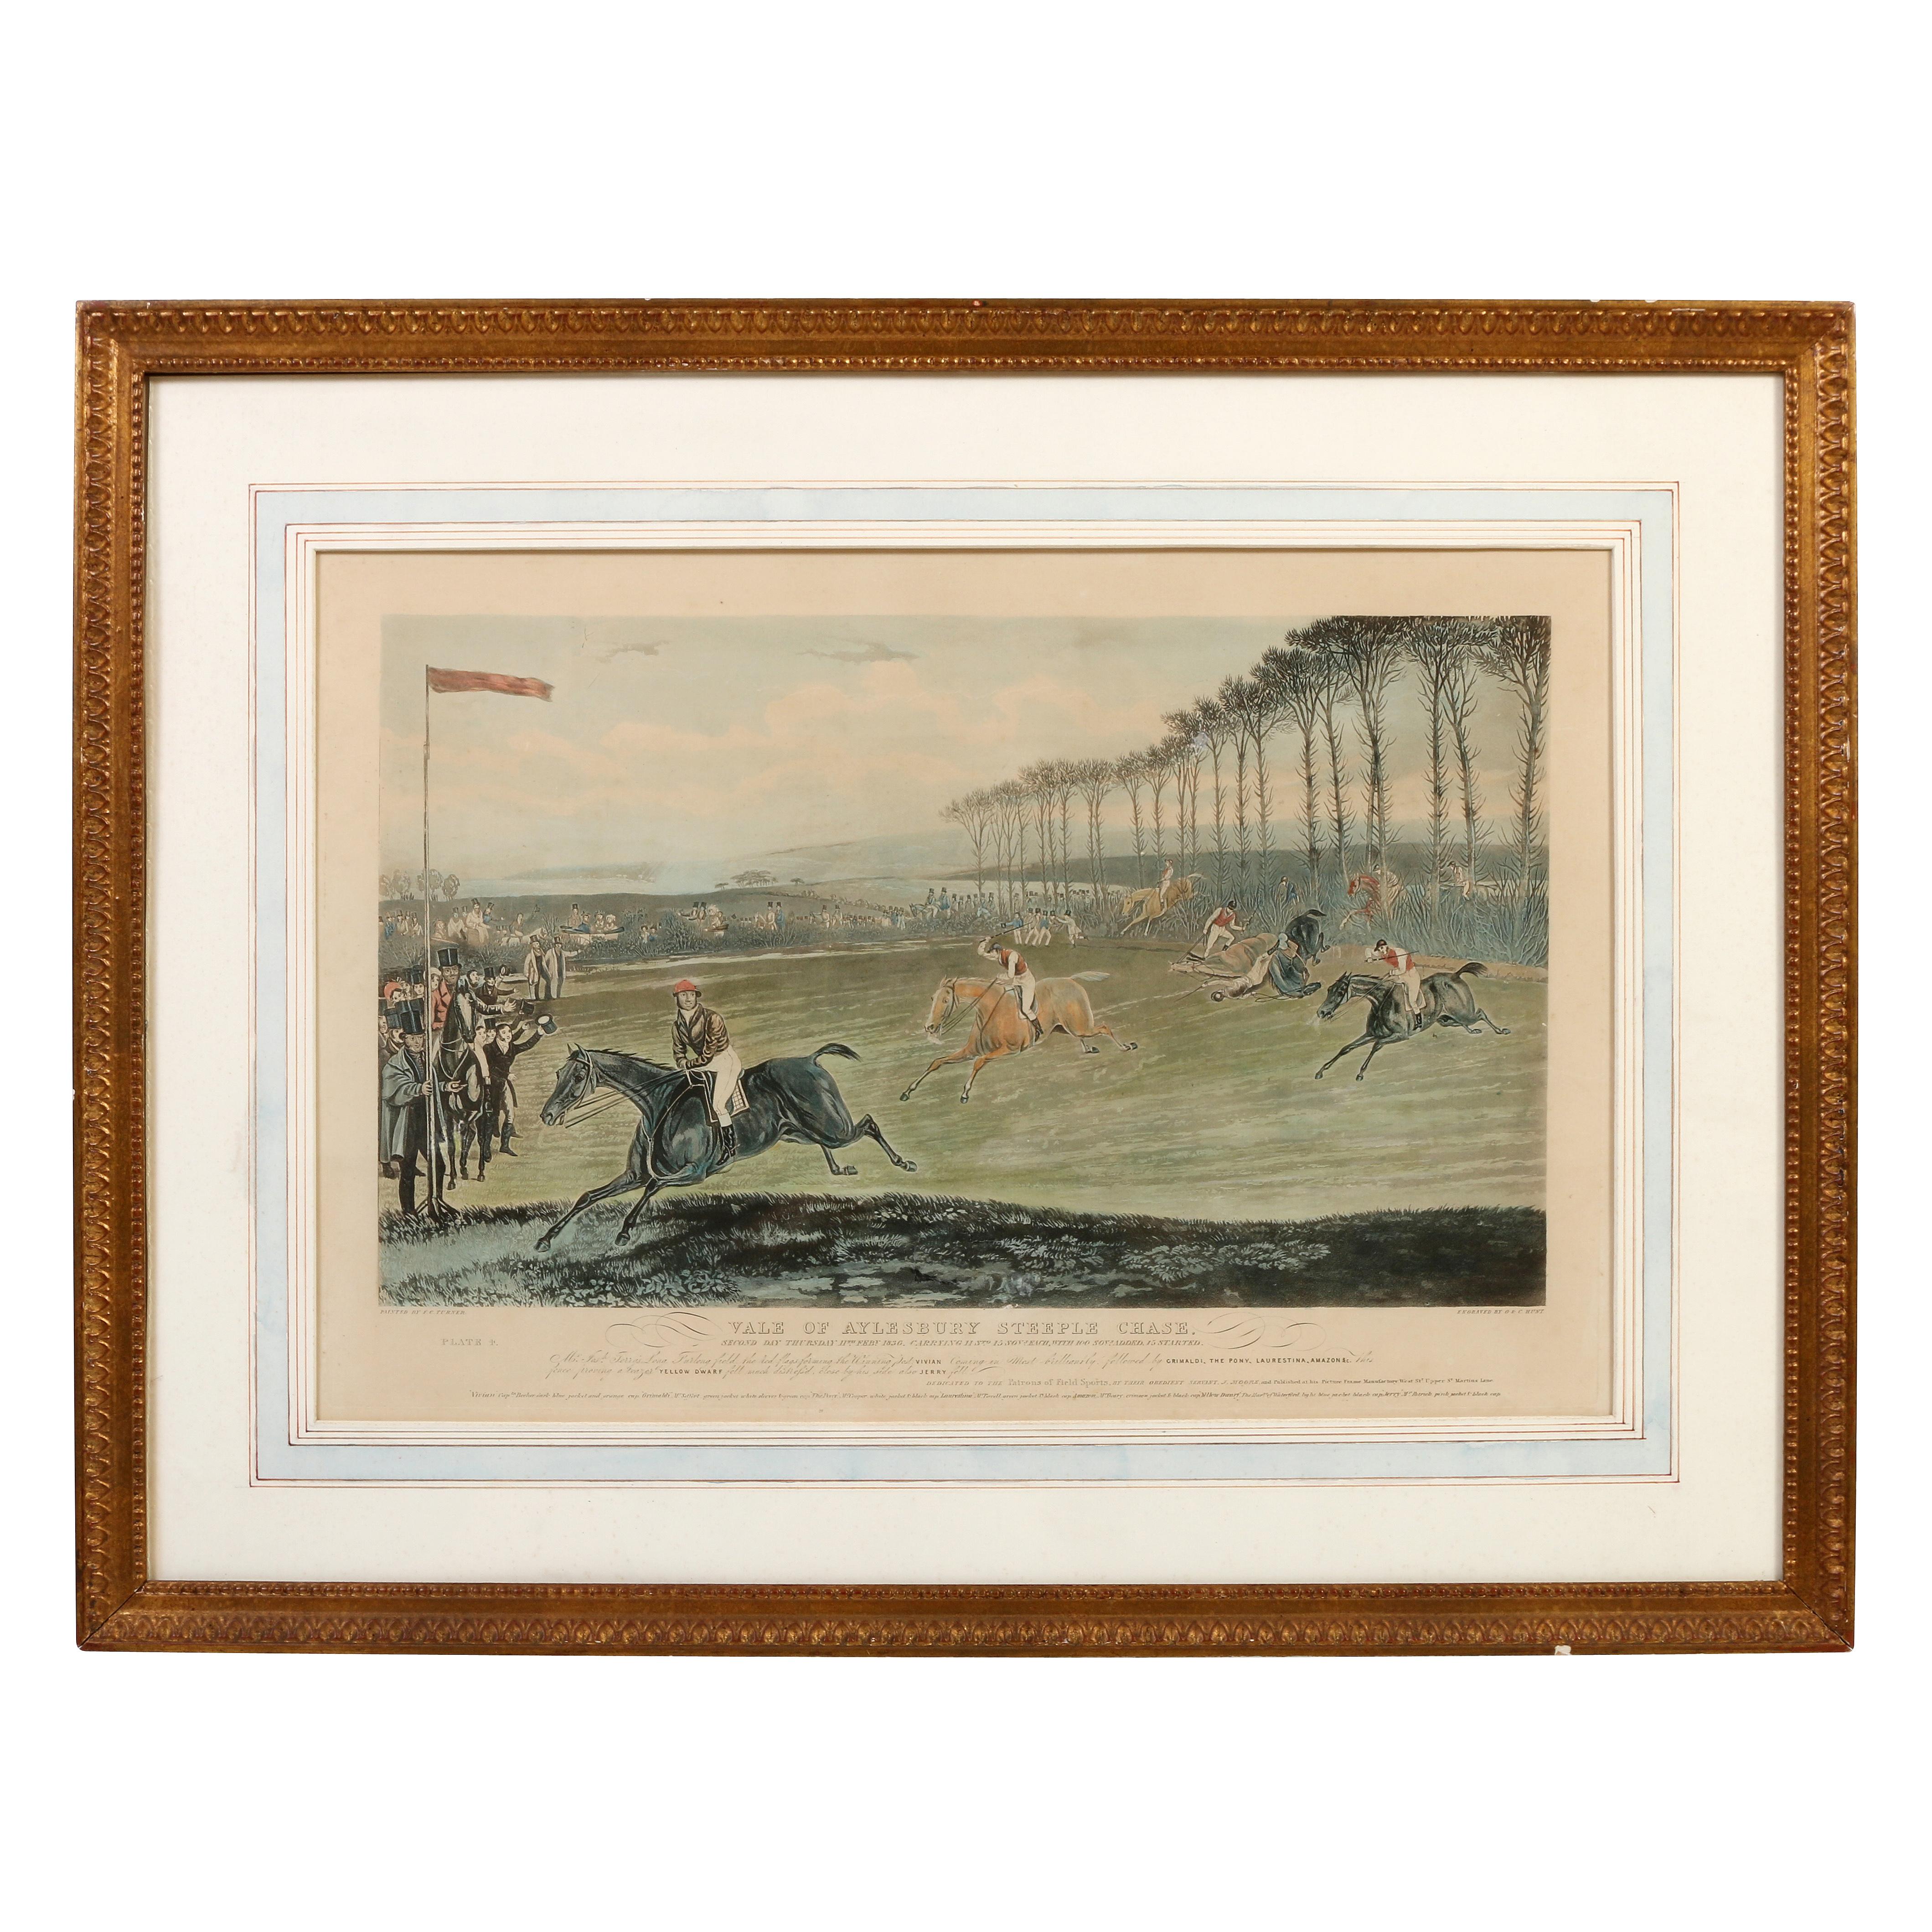 A set of four framed prints of steelpechase horseback riding scenes.